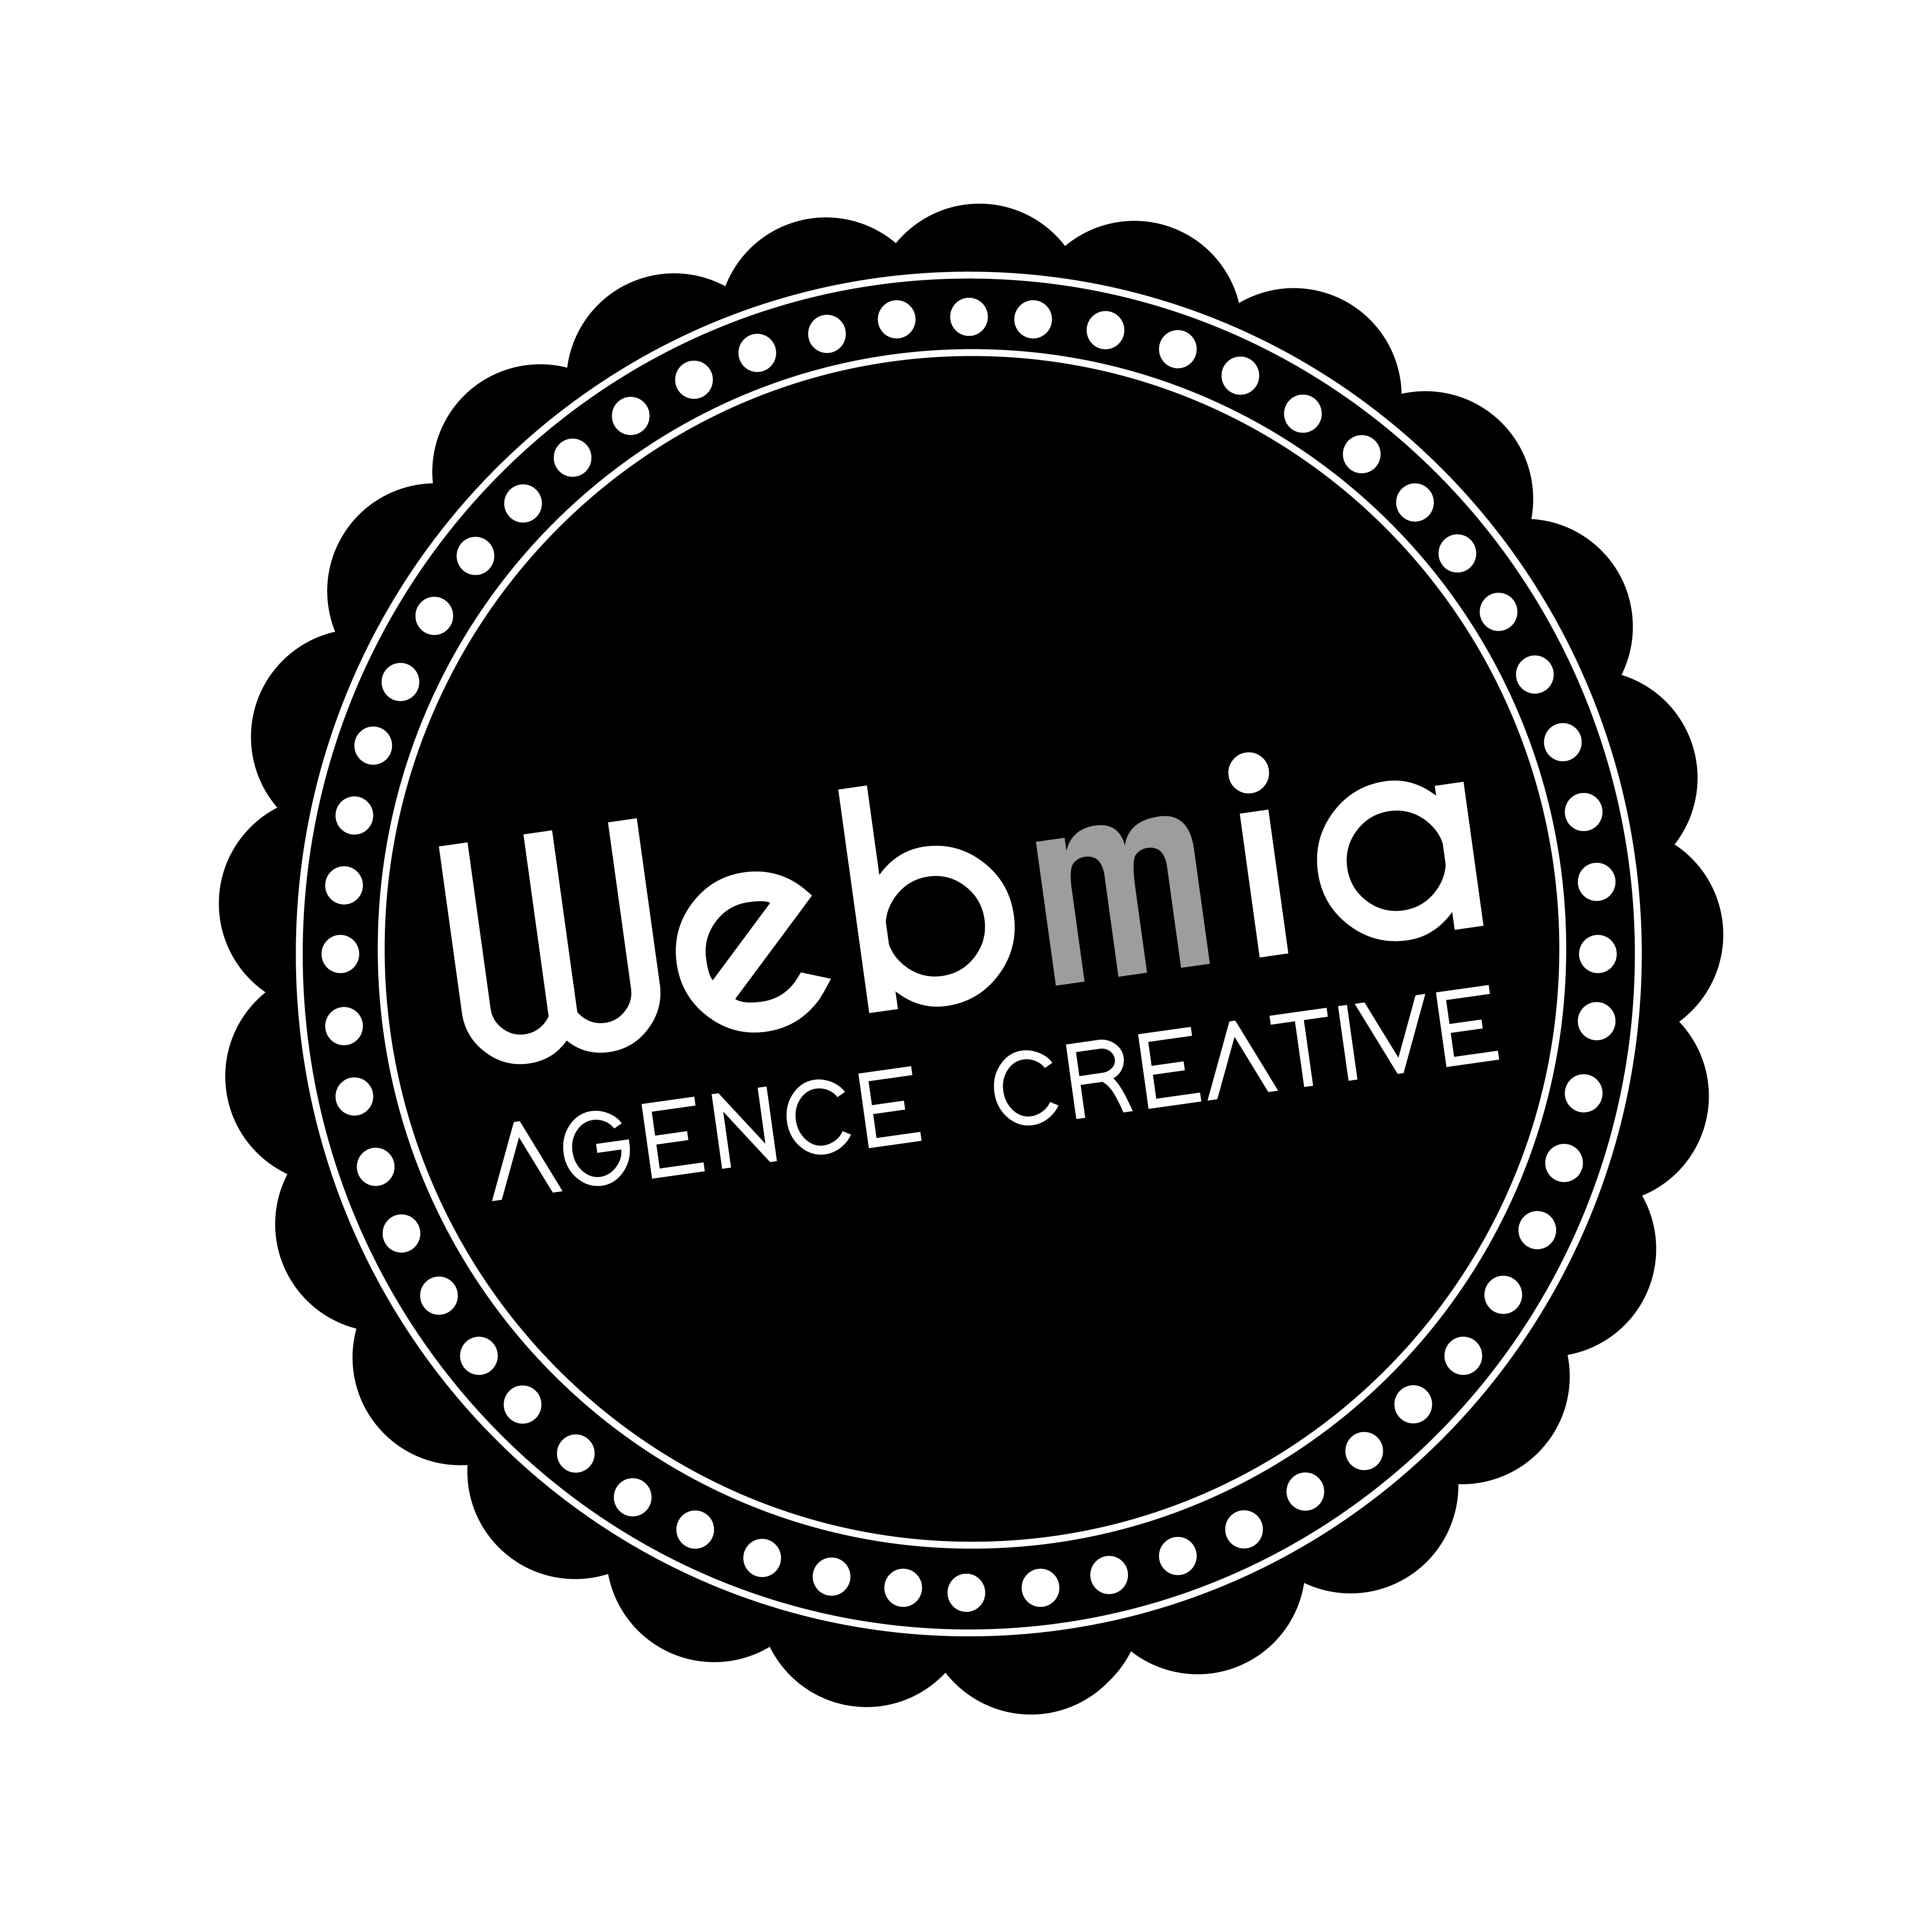 Webmia